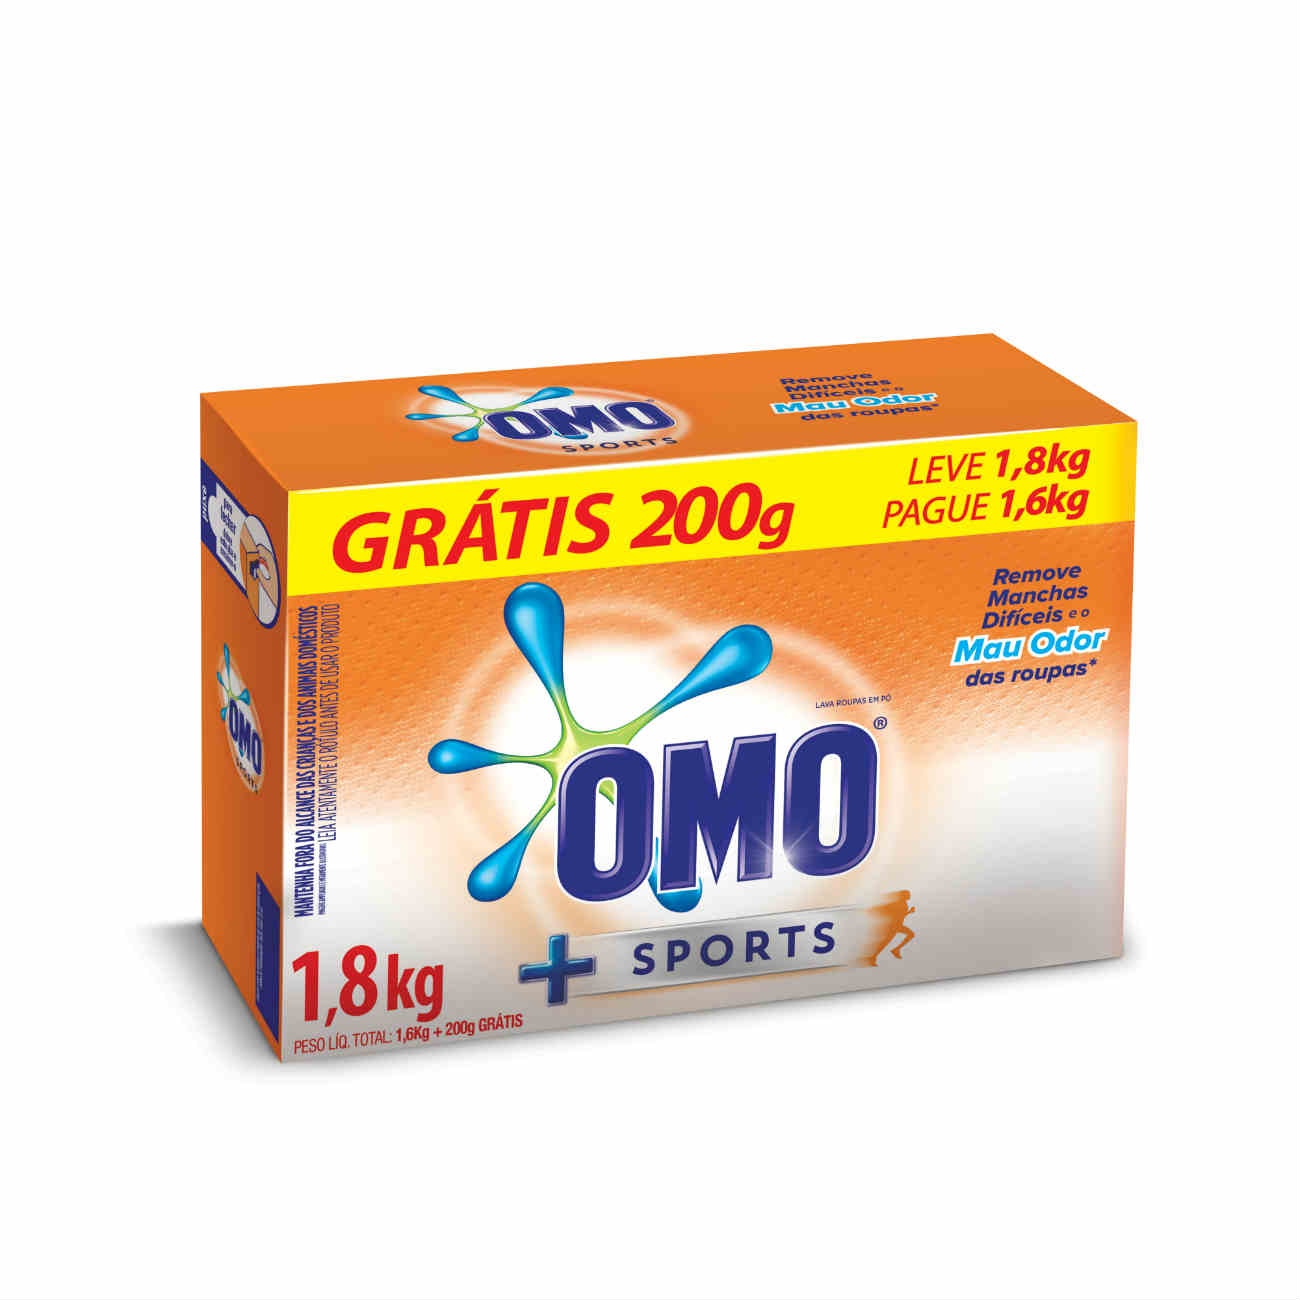 Oferta Detergente em Pó Omo Sports Pague 1,6 Kg Leve 1,8Kg